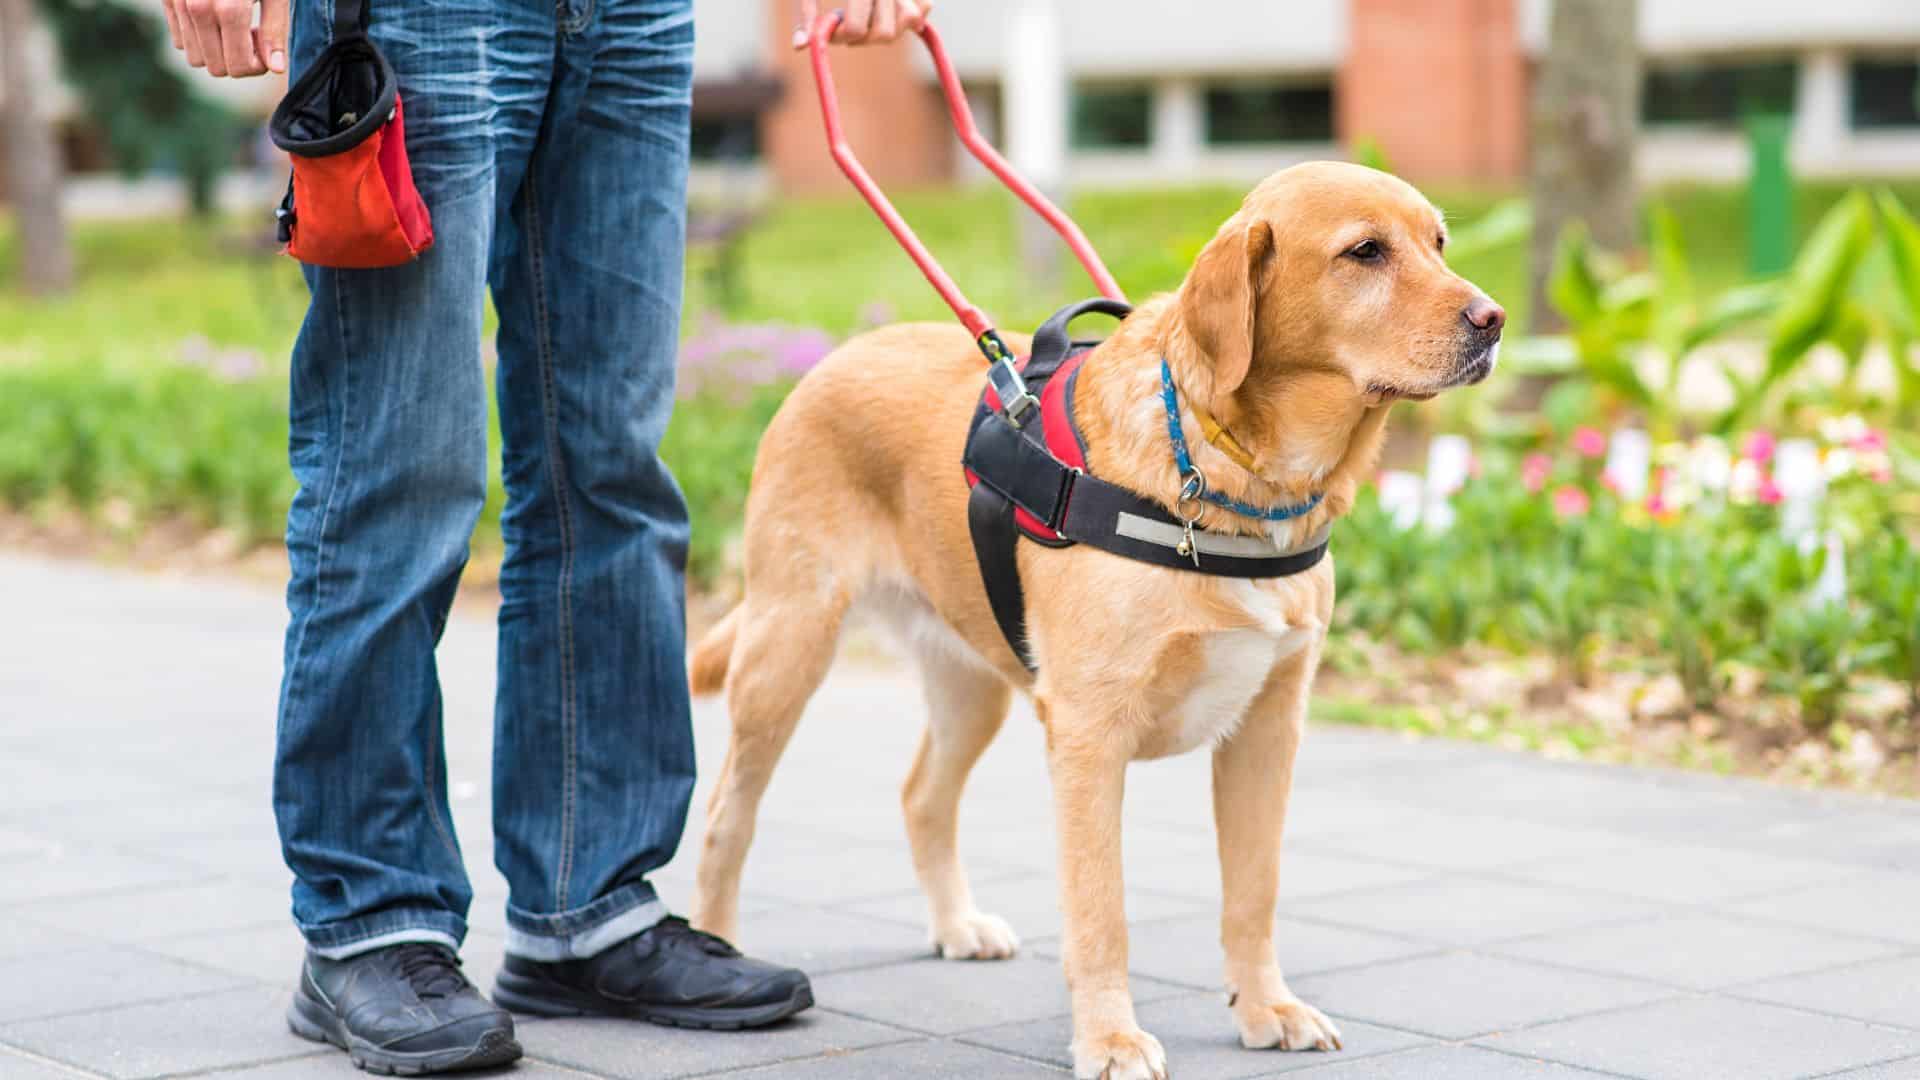 International Guide Dogs Day: A service dog on duty.